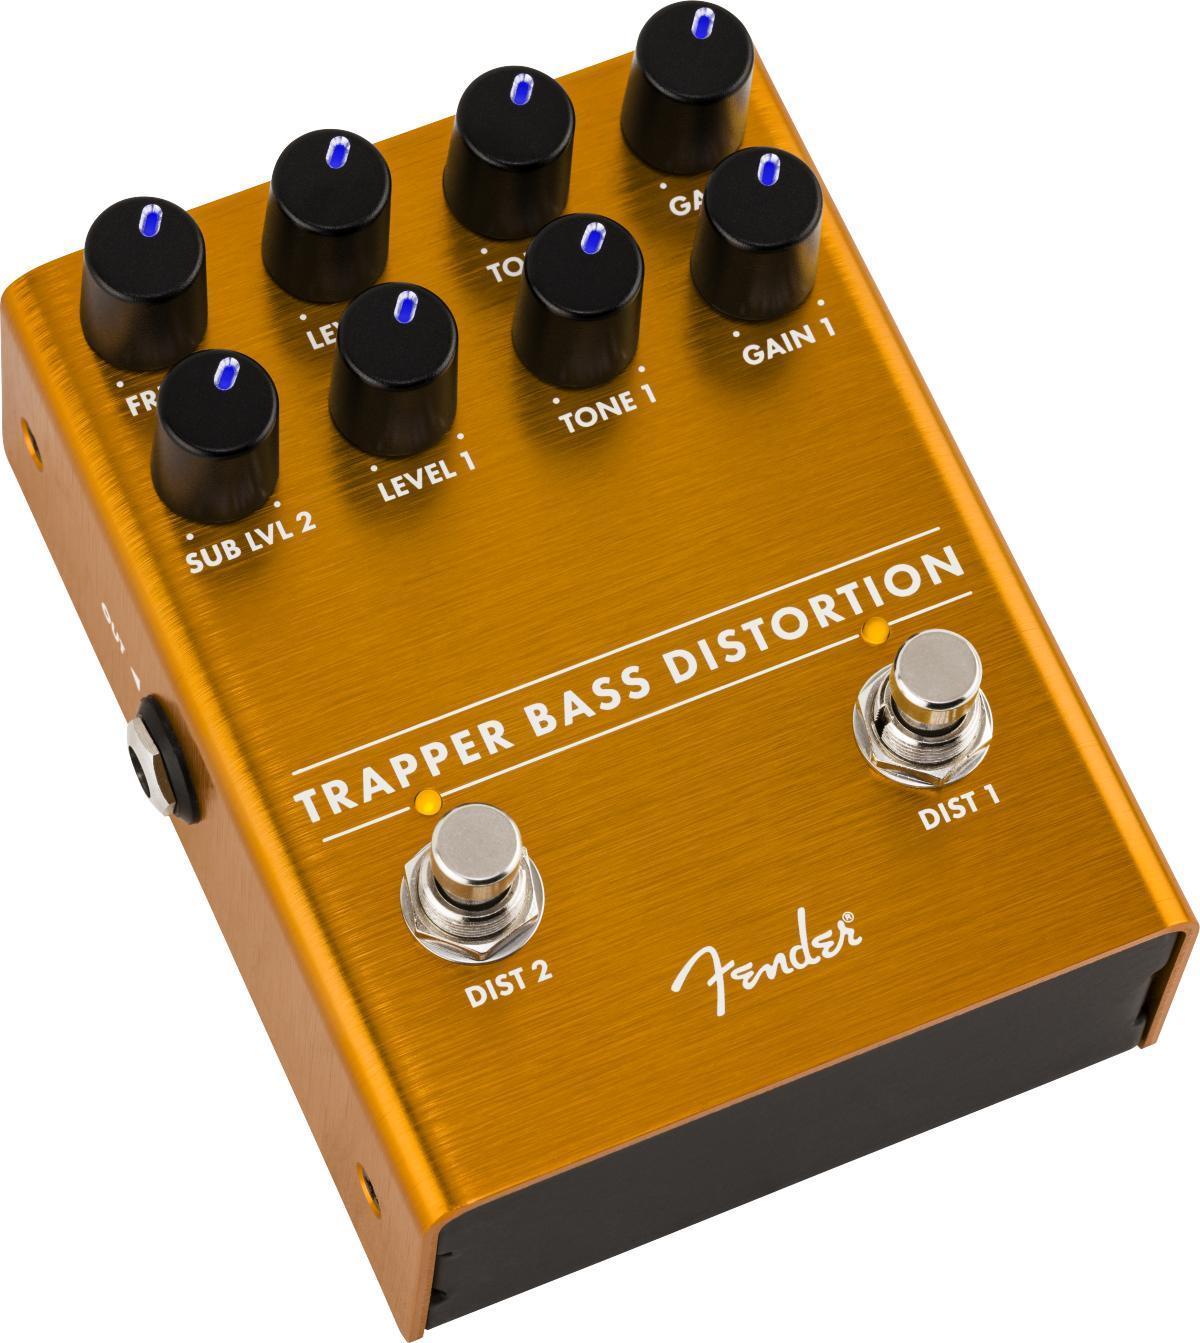 Overdrive, distortion, fuzz effect pedal for bass Fender Trapper Bass Distortion